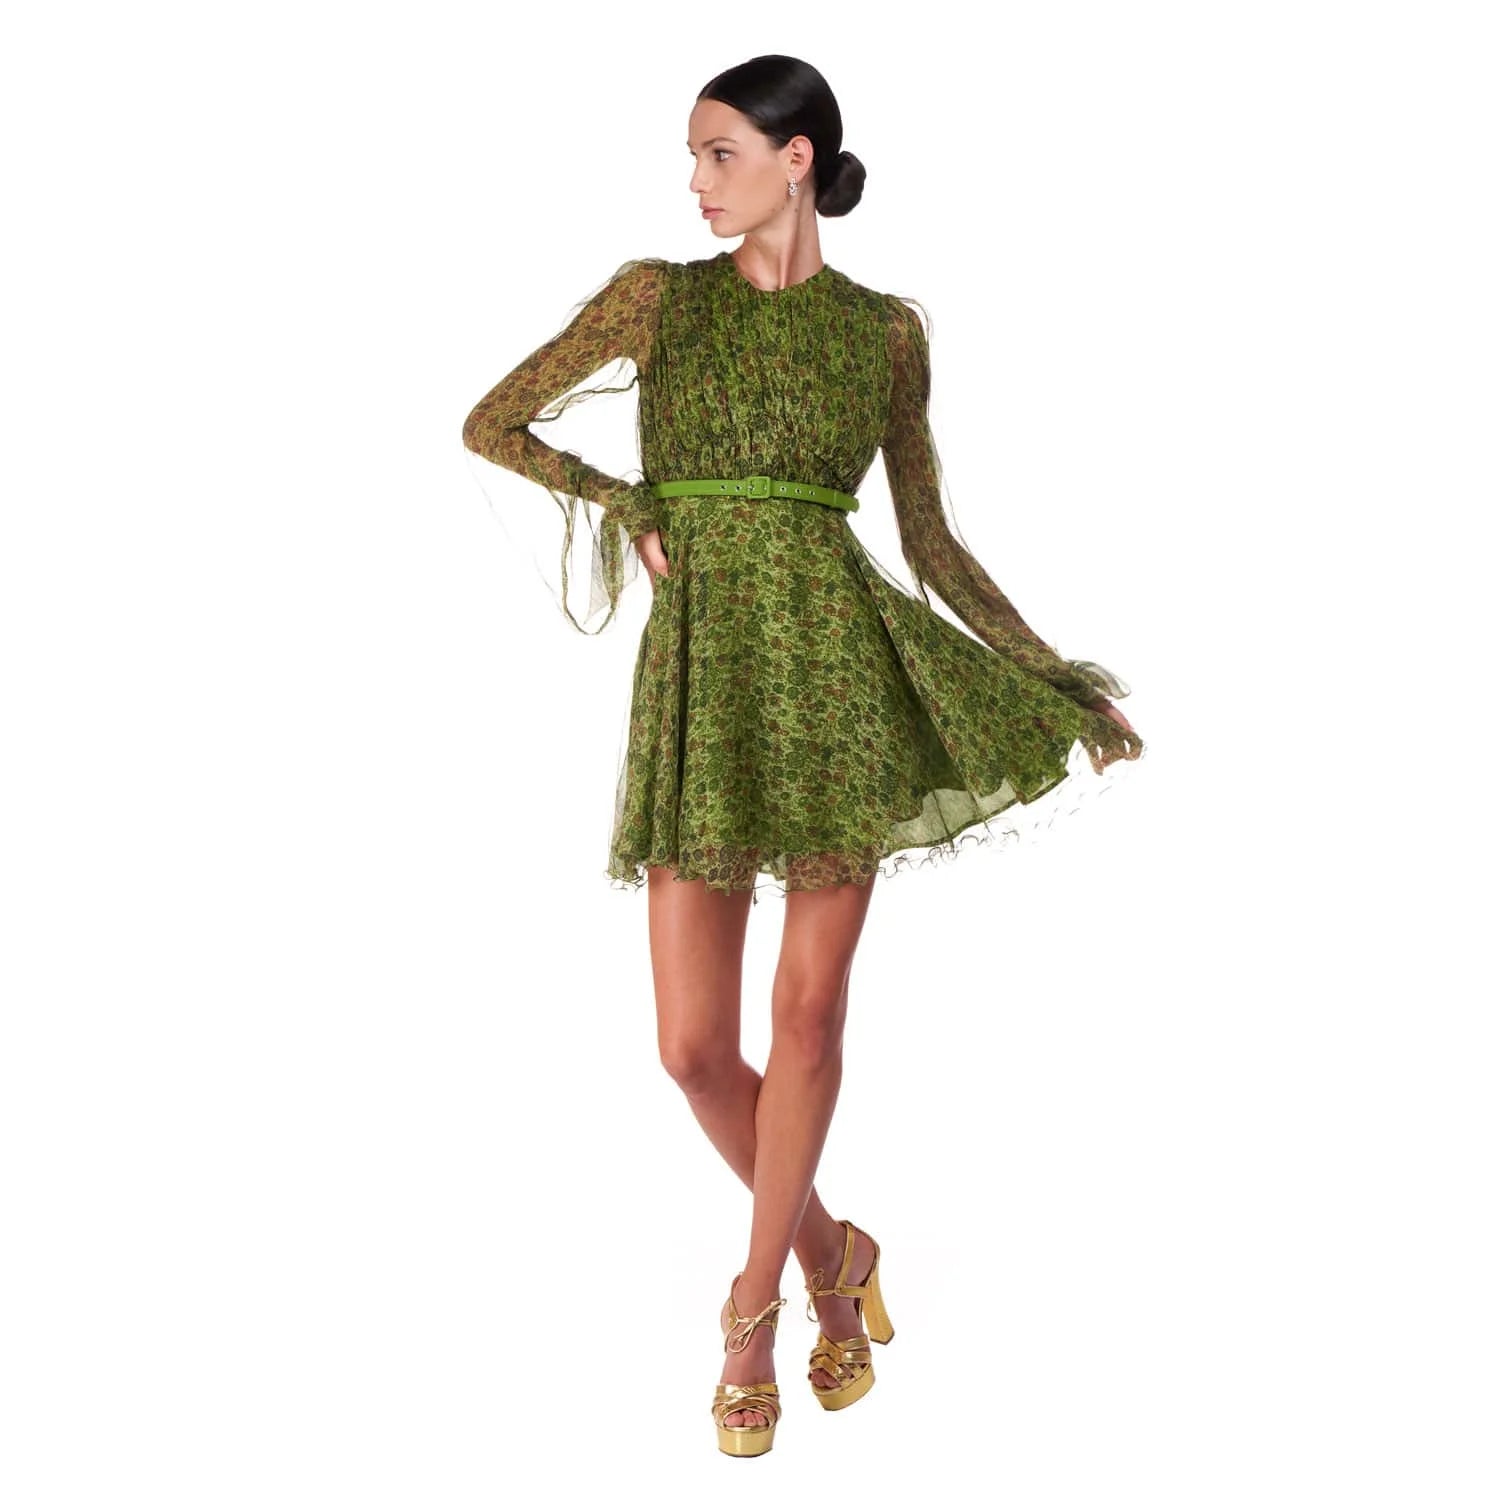 Short dress in silk crepon - Dress